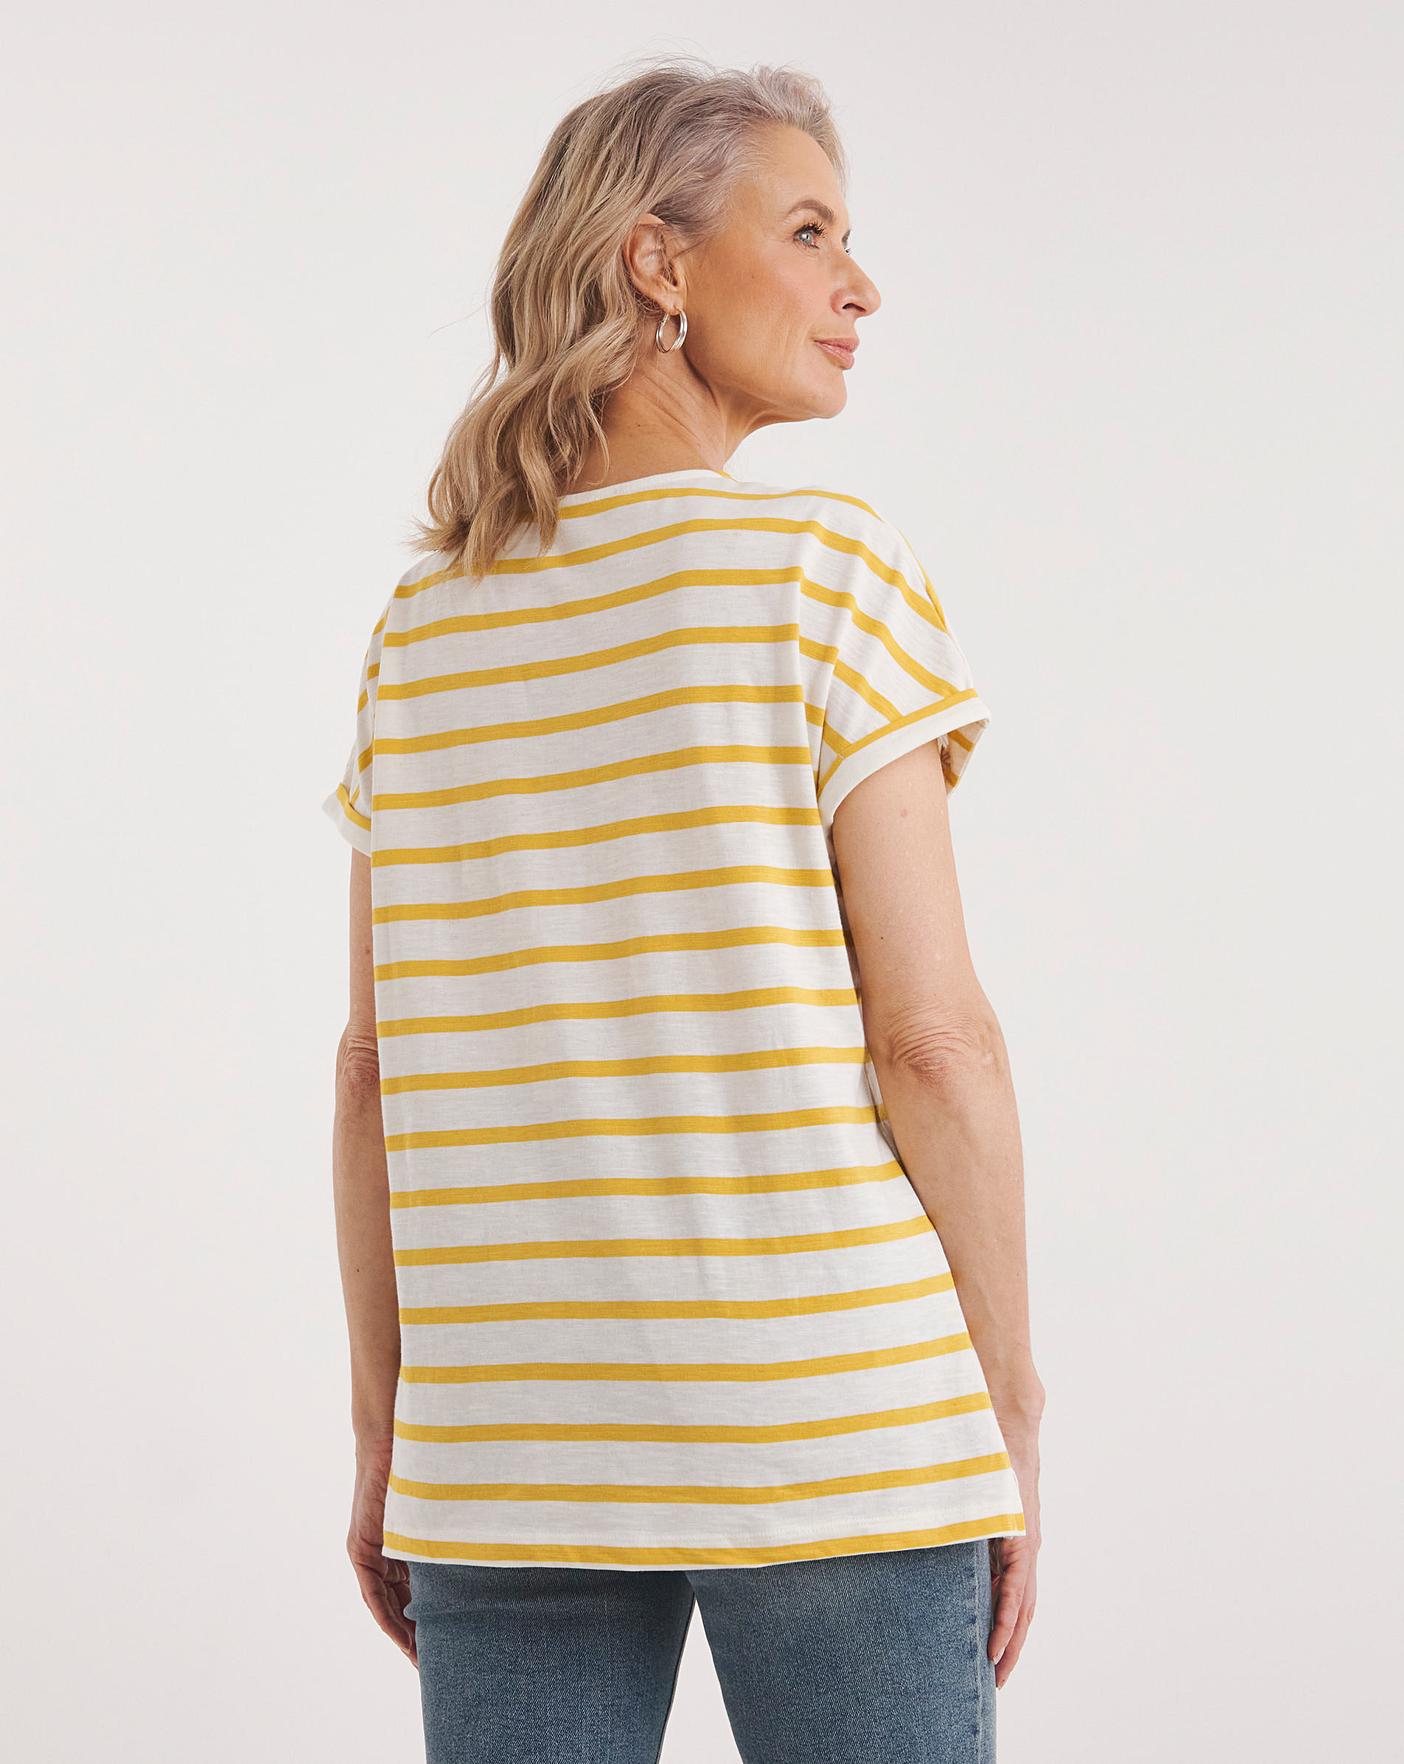 Julipa Embroidered Stripe T-Shirt | J D Williams